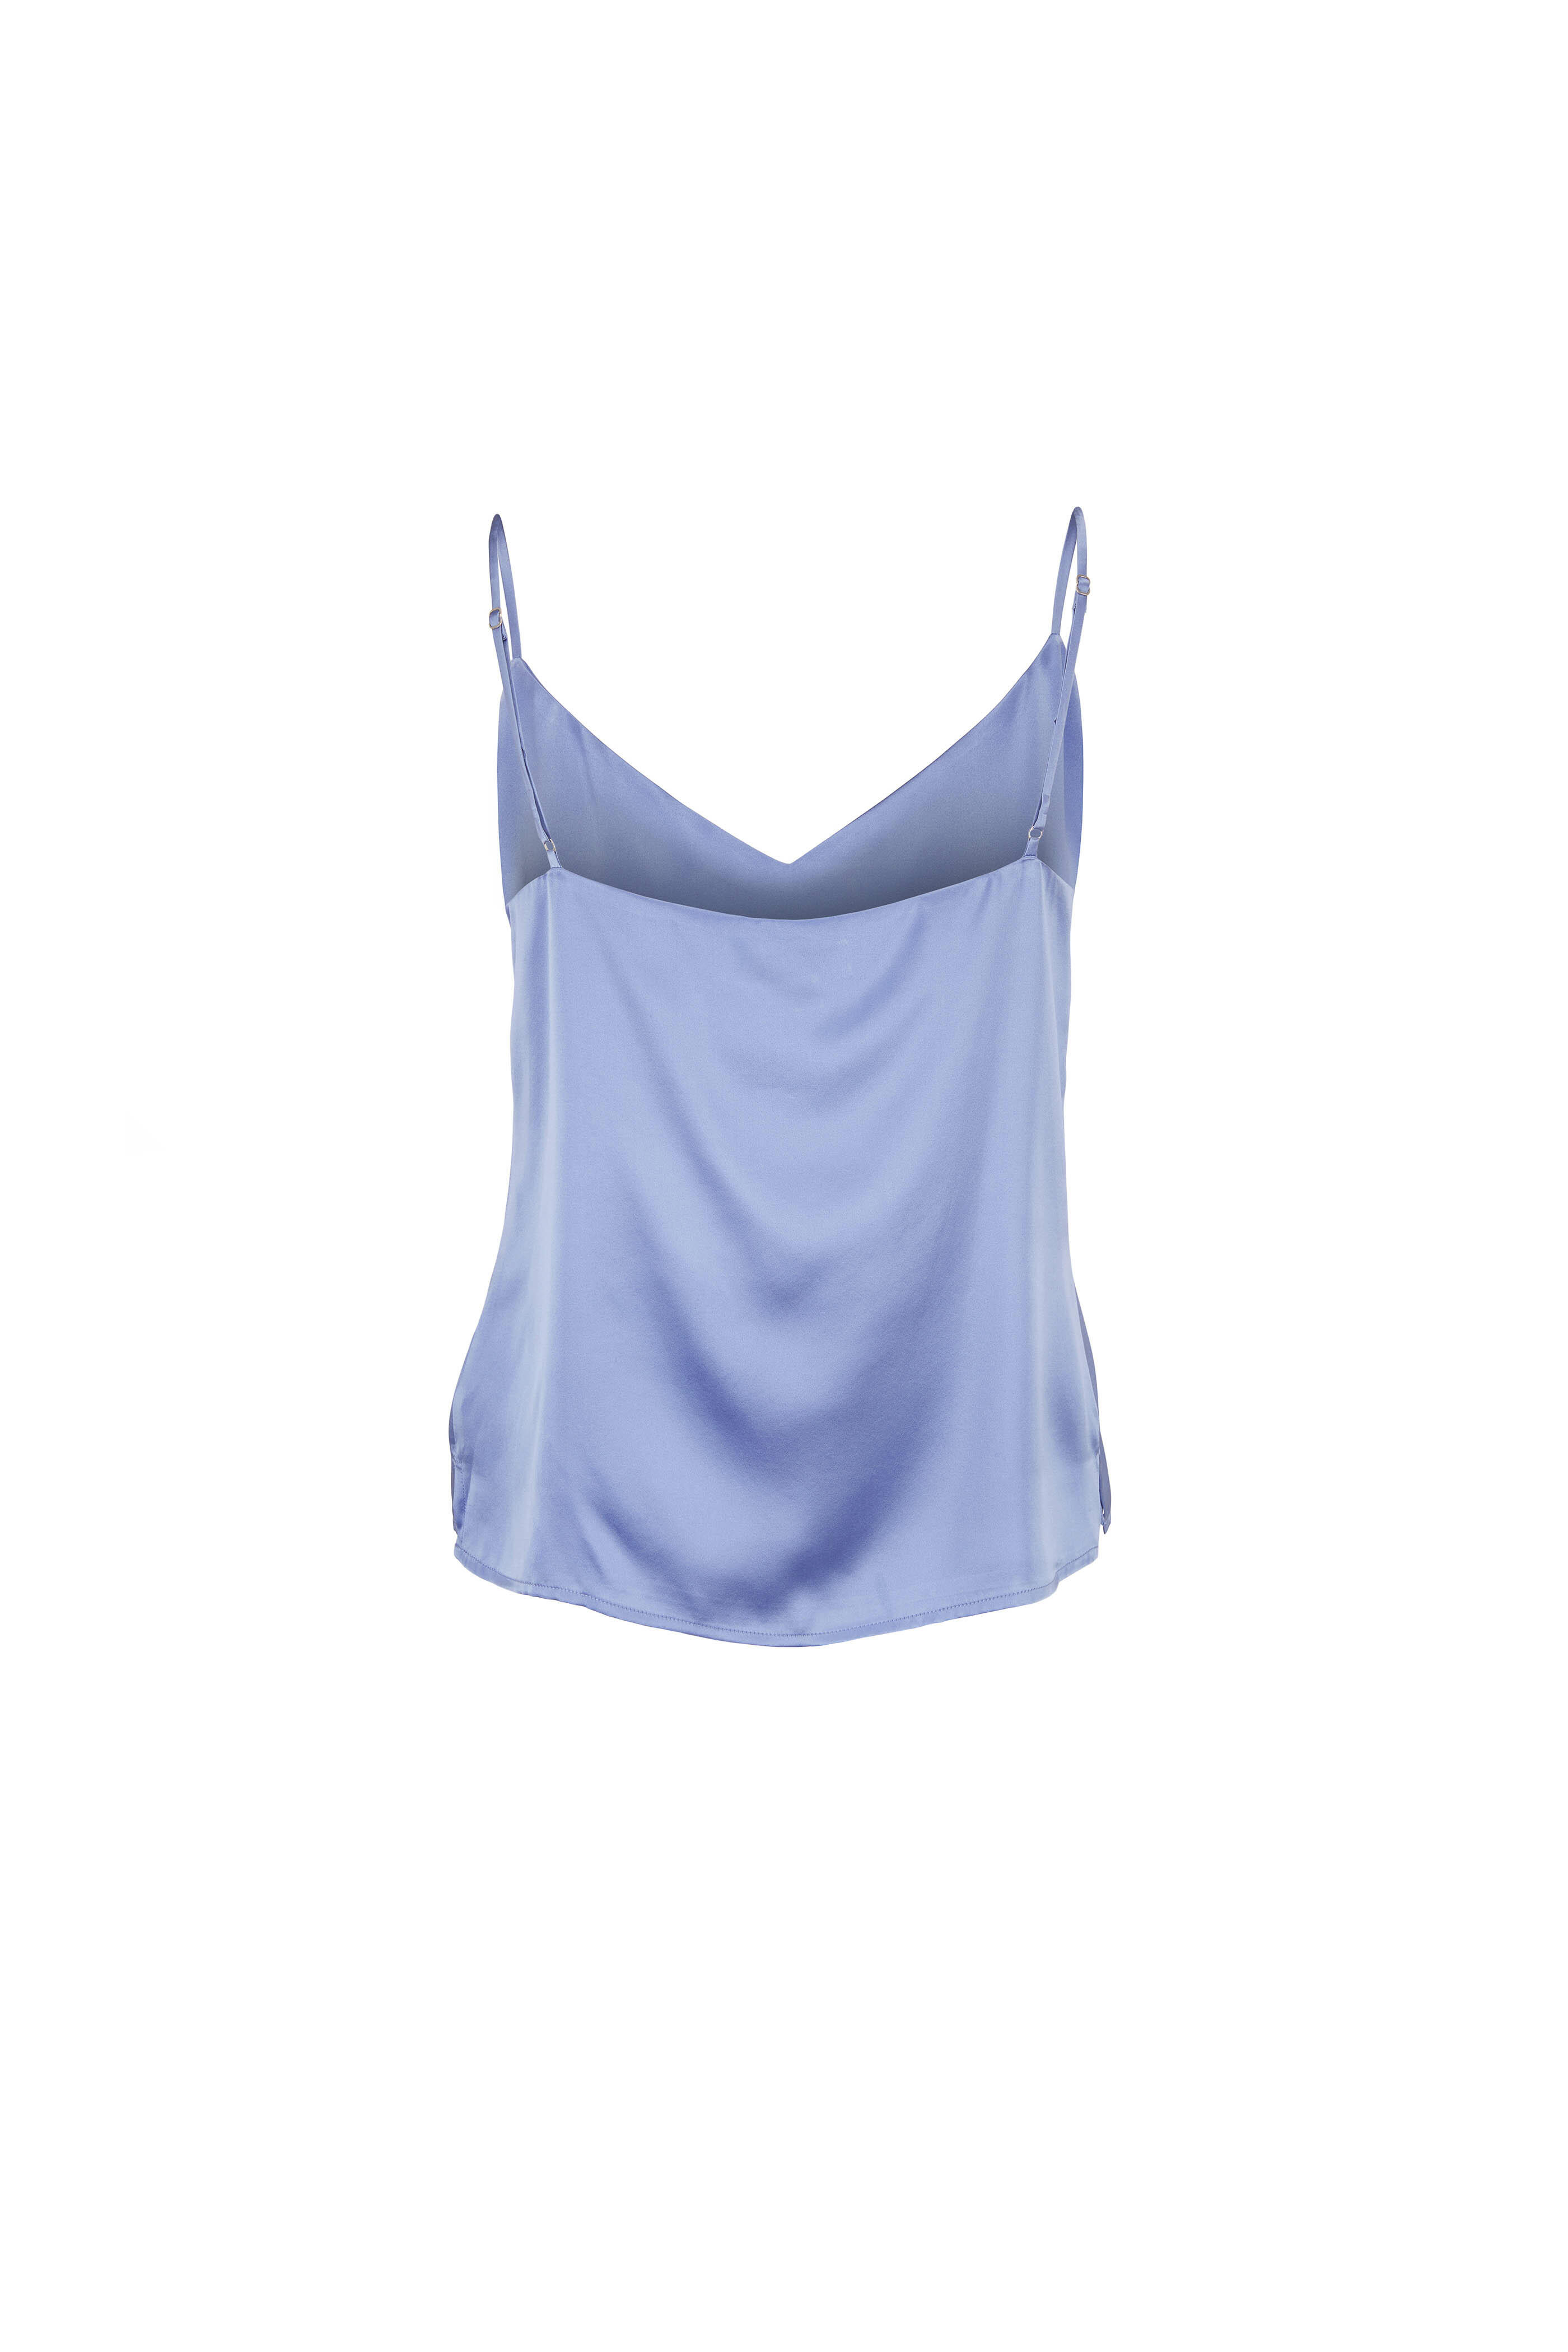 Powder Blue - Silk Camisole